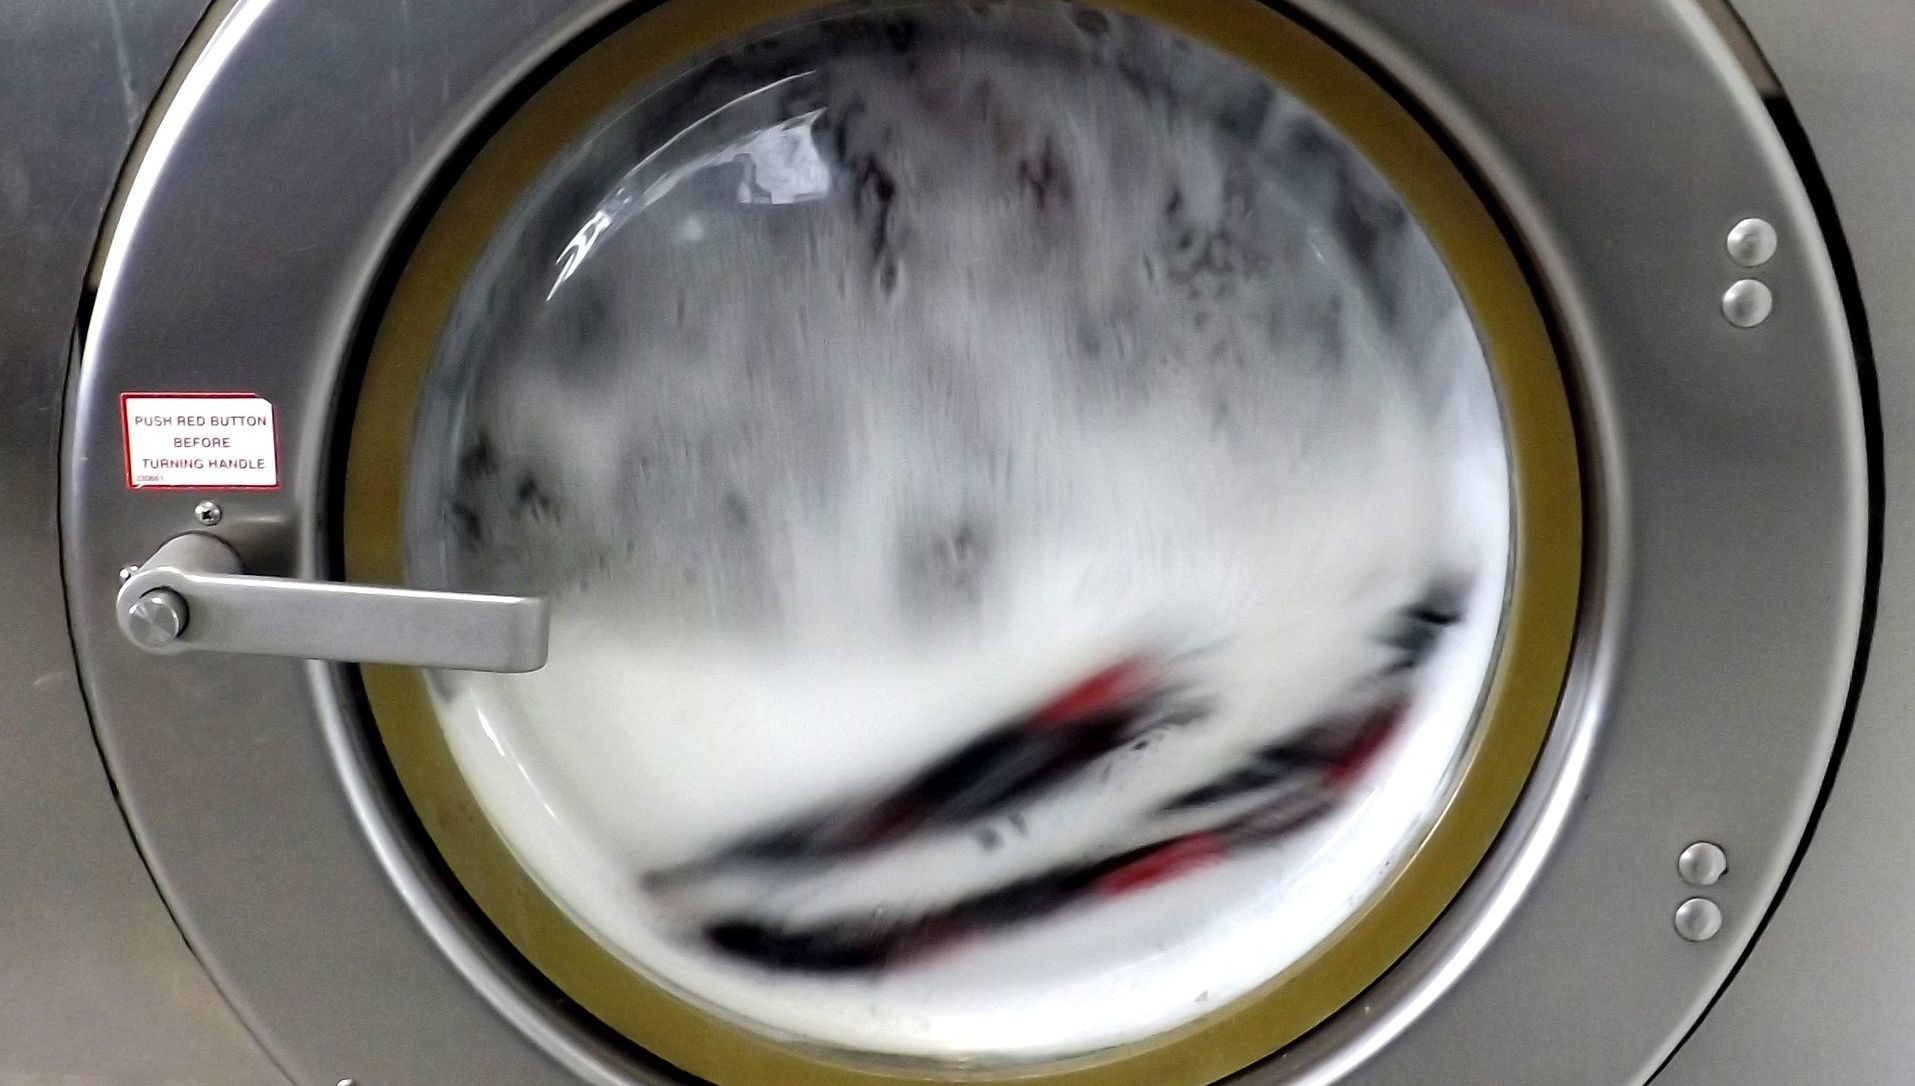 Centrifugado en la lavadora